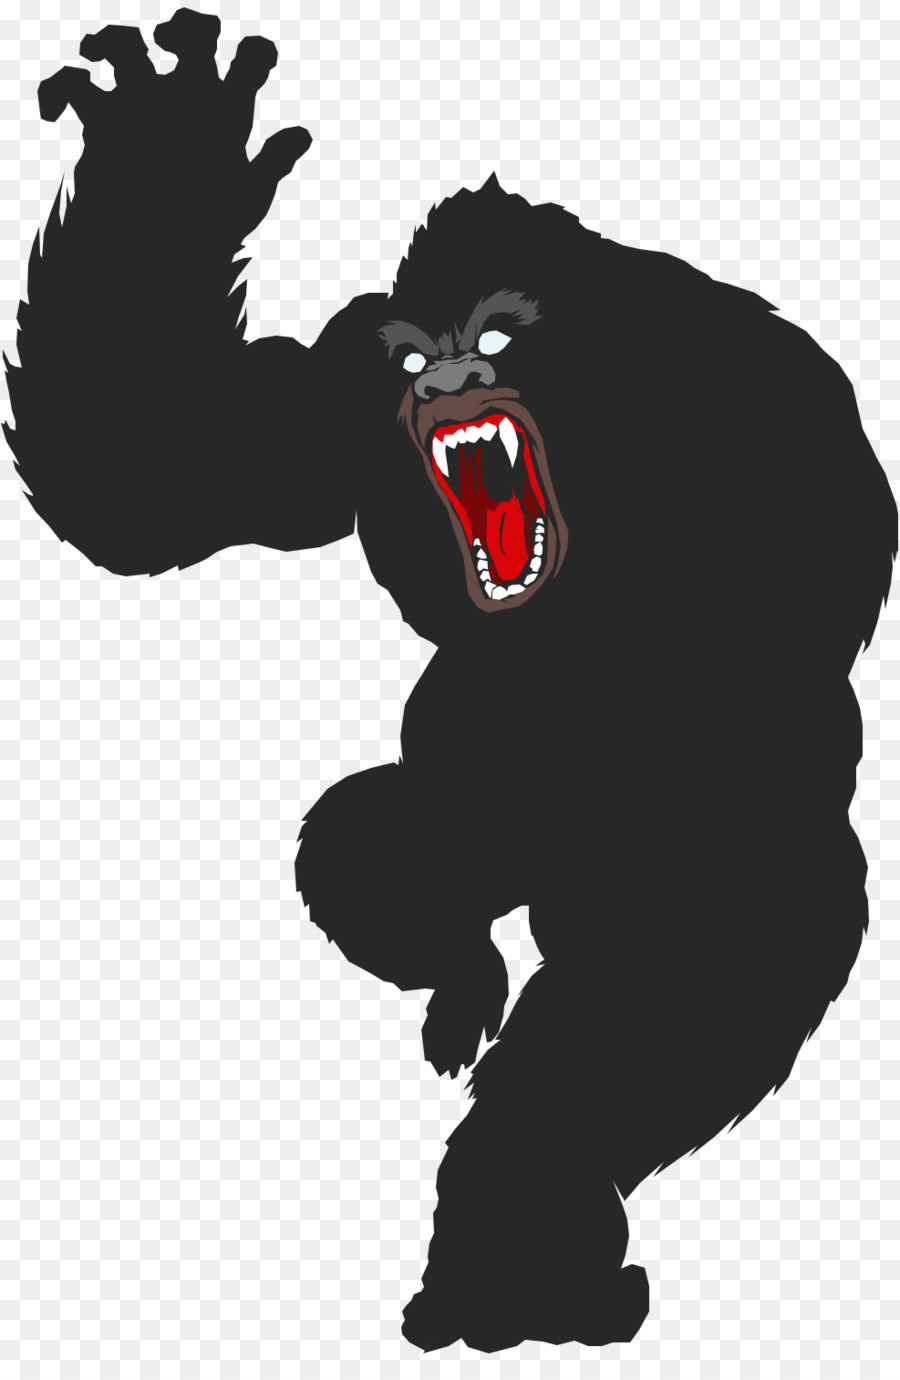 Gorilla King Kong Ape Primate - gorilla vector png download - 987*1500 - Free Transparent Gorilla png Download.